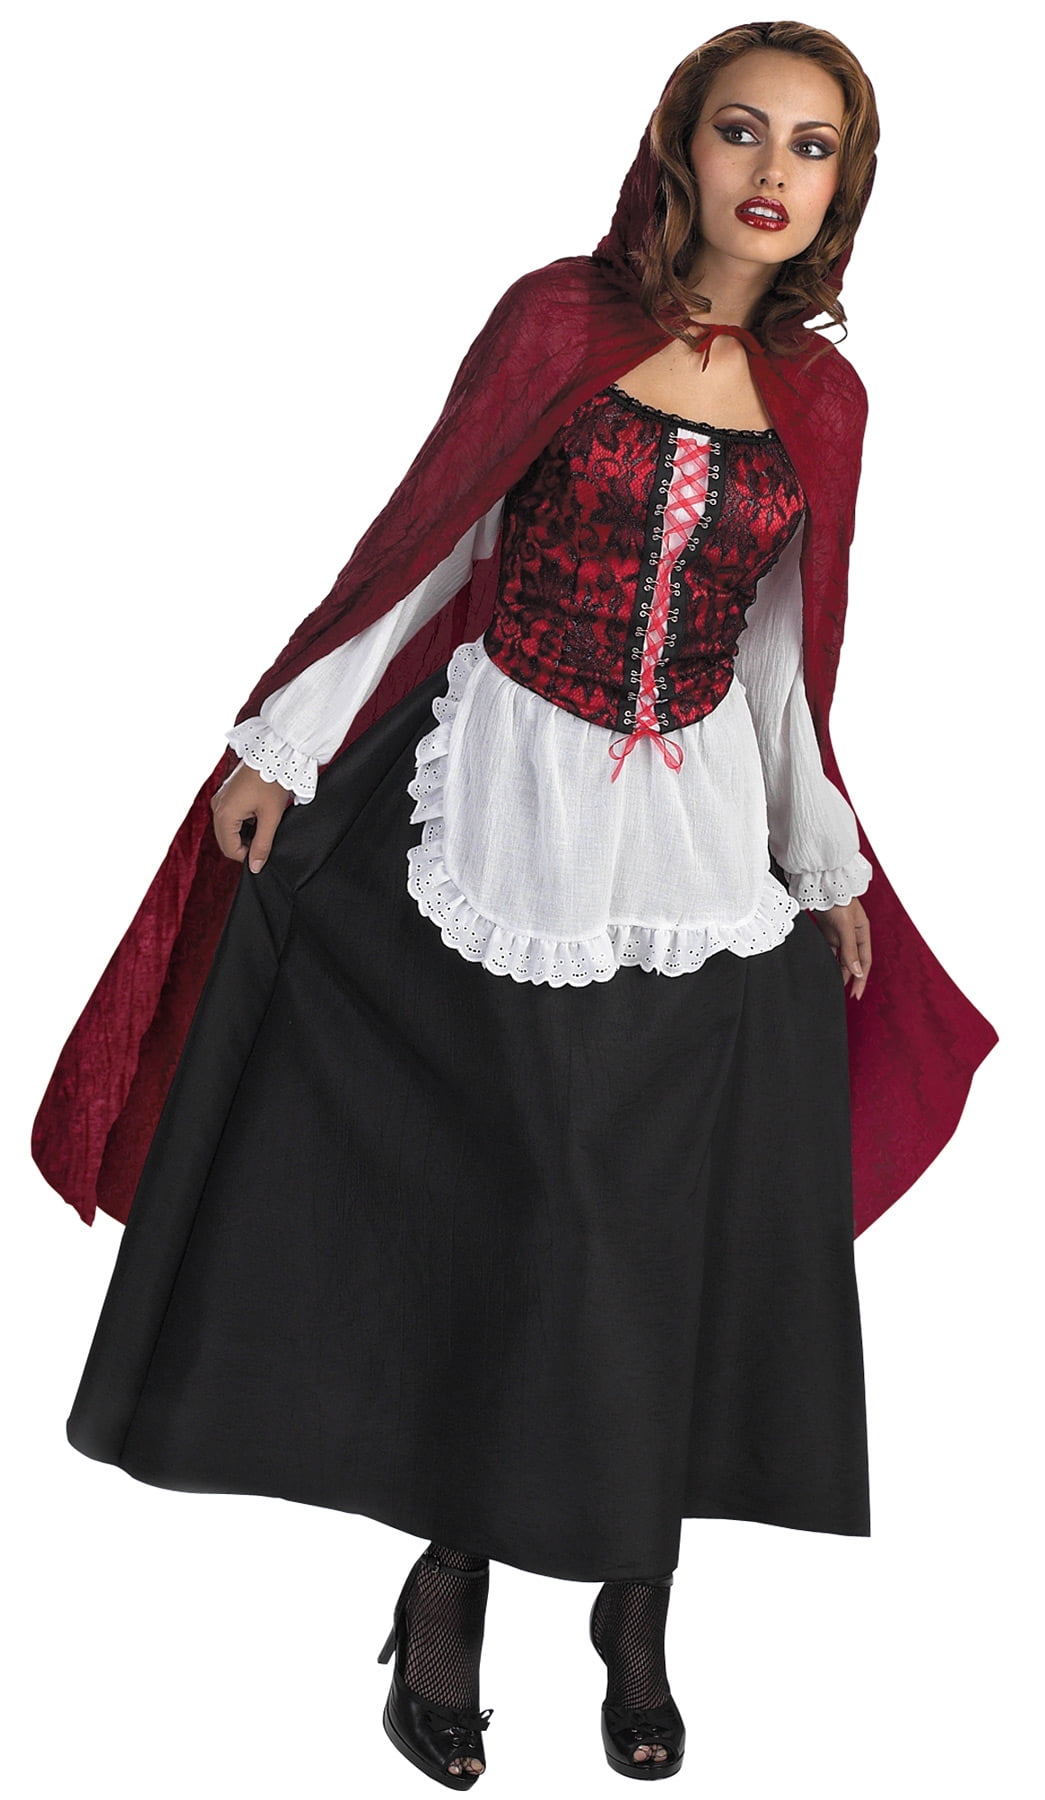 Red Riding Hood Halloween Adult Costume - One Size - Walmart.com